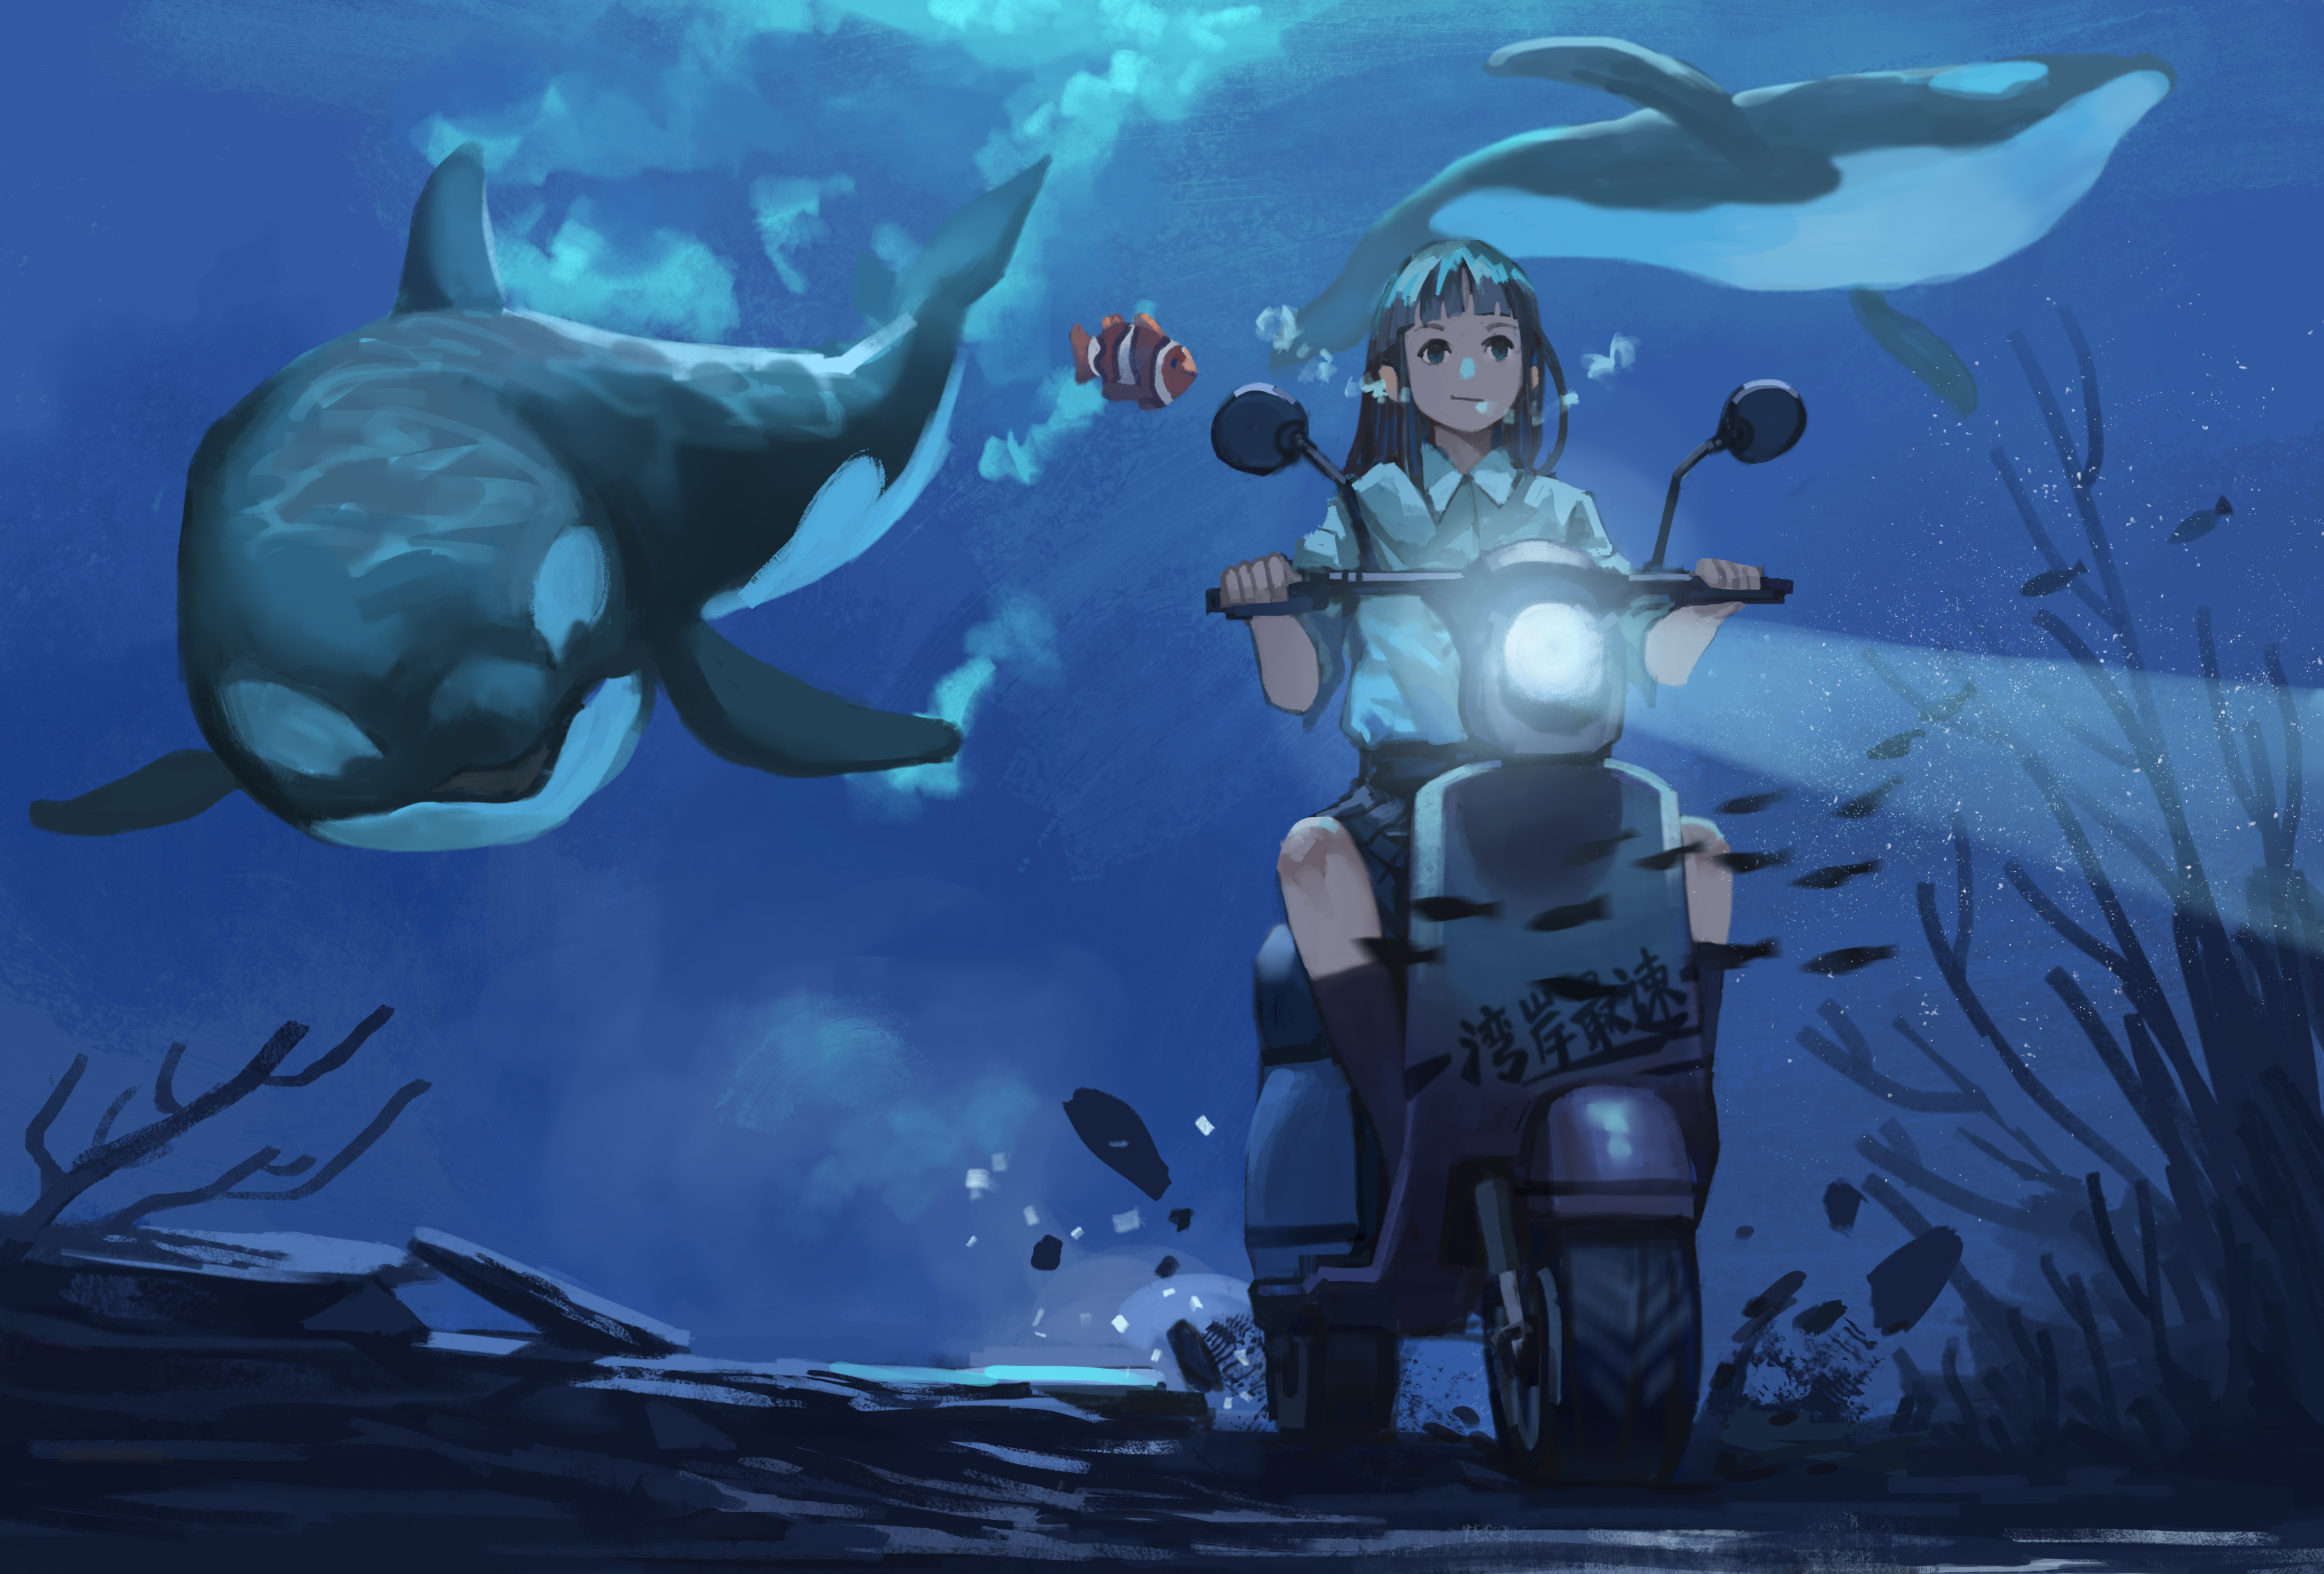 Anime Girl Riding Bike Under Water Wallpaper, HD Anime 4K Wallpapers